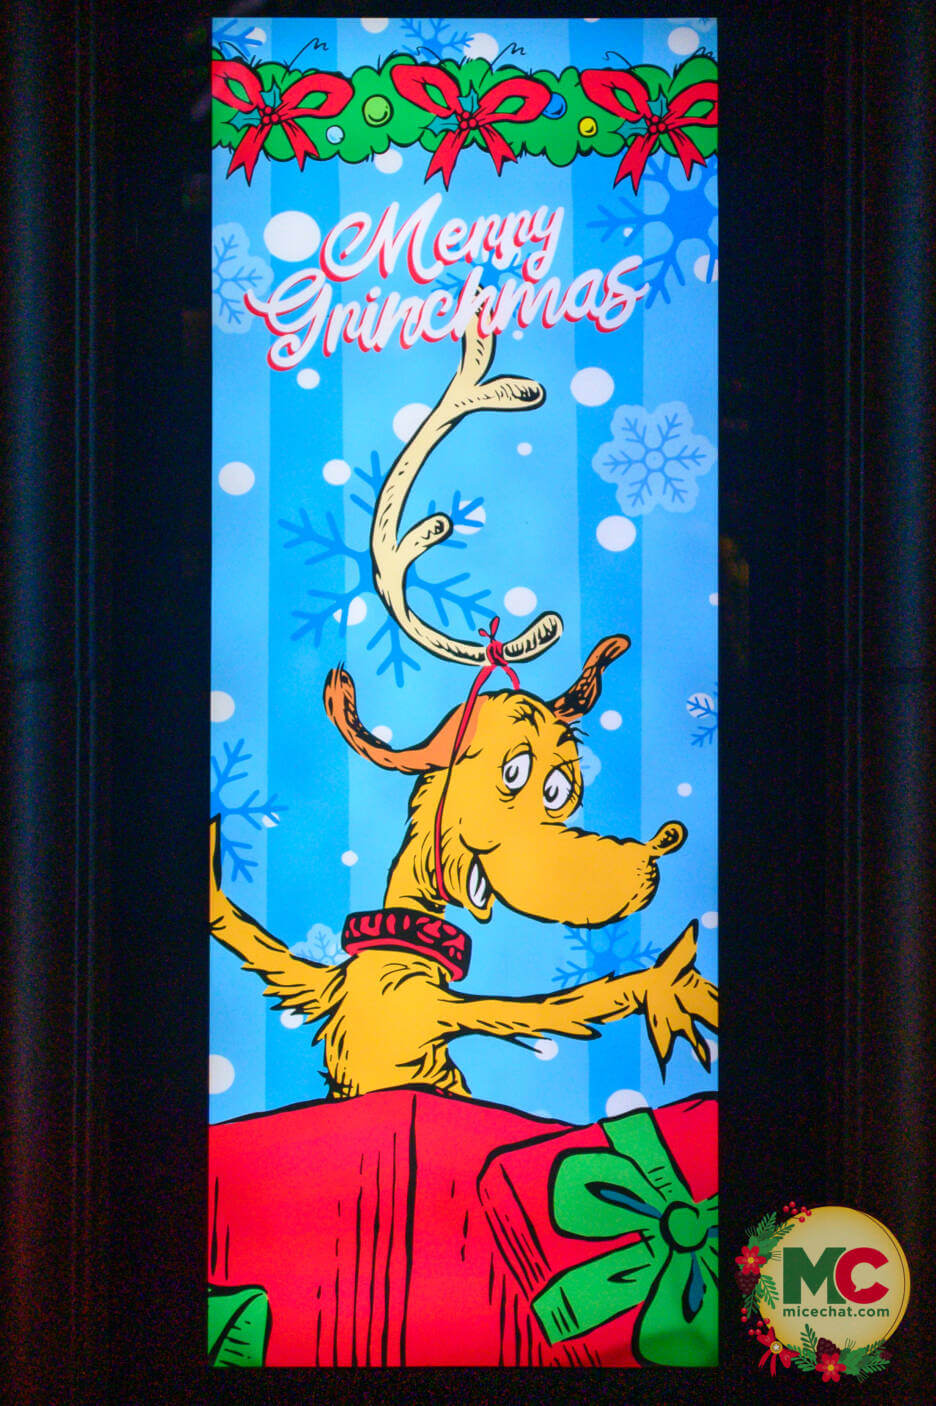 Grinchmas, A Magical &#038; Grinchy Christmas at Universal Studios Hollywood!